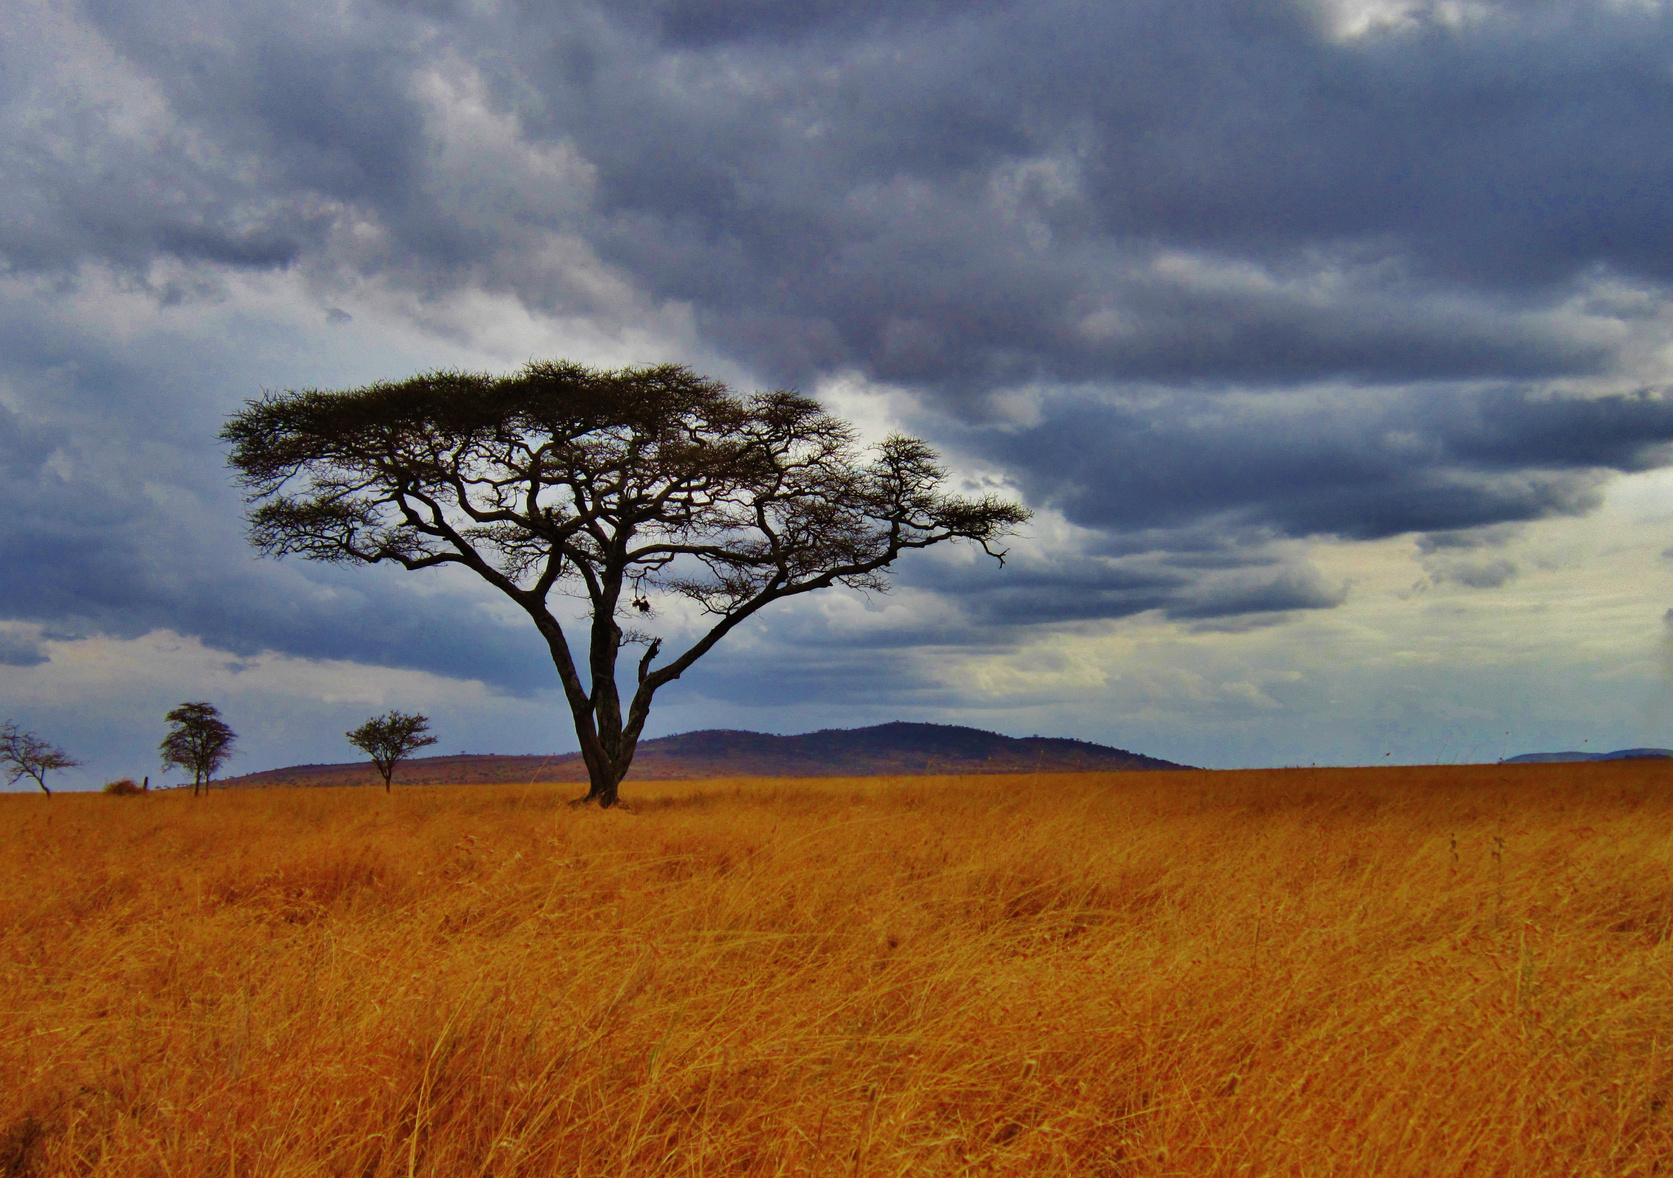 Acacia Tree in the Serengeti, Africa